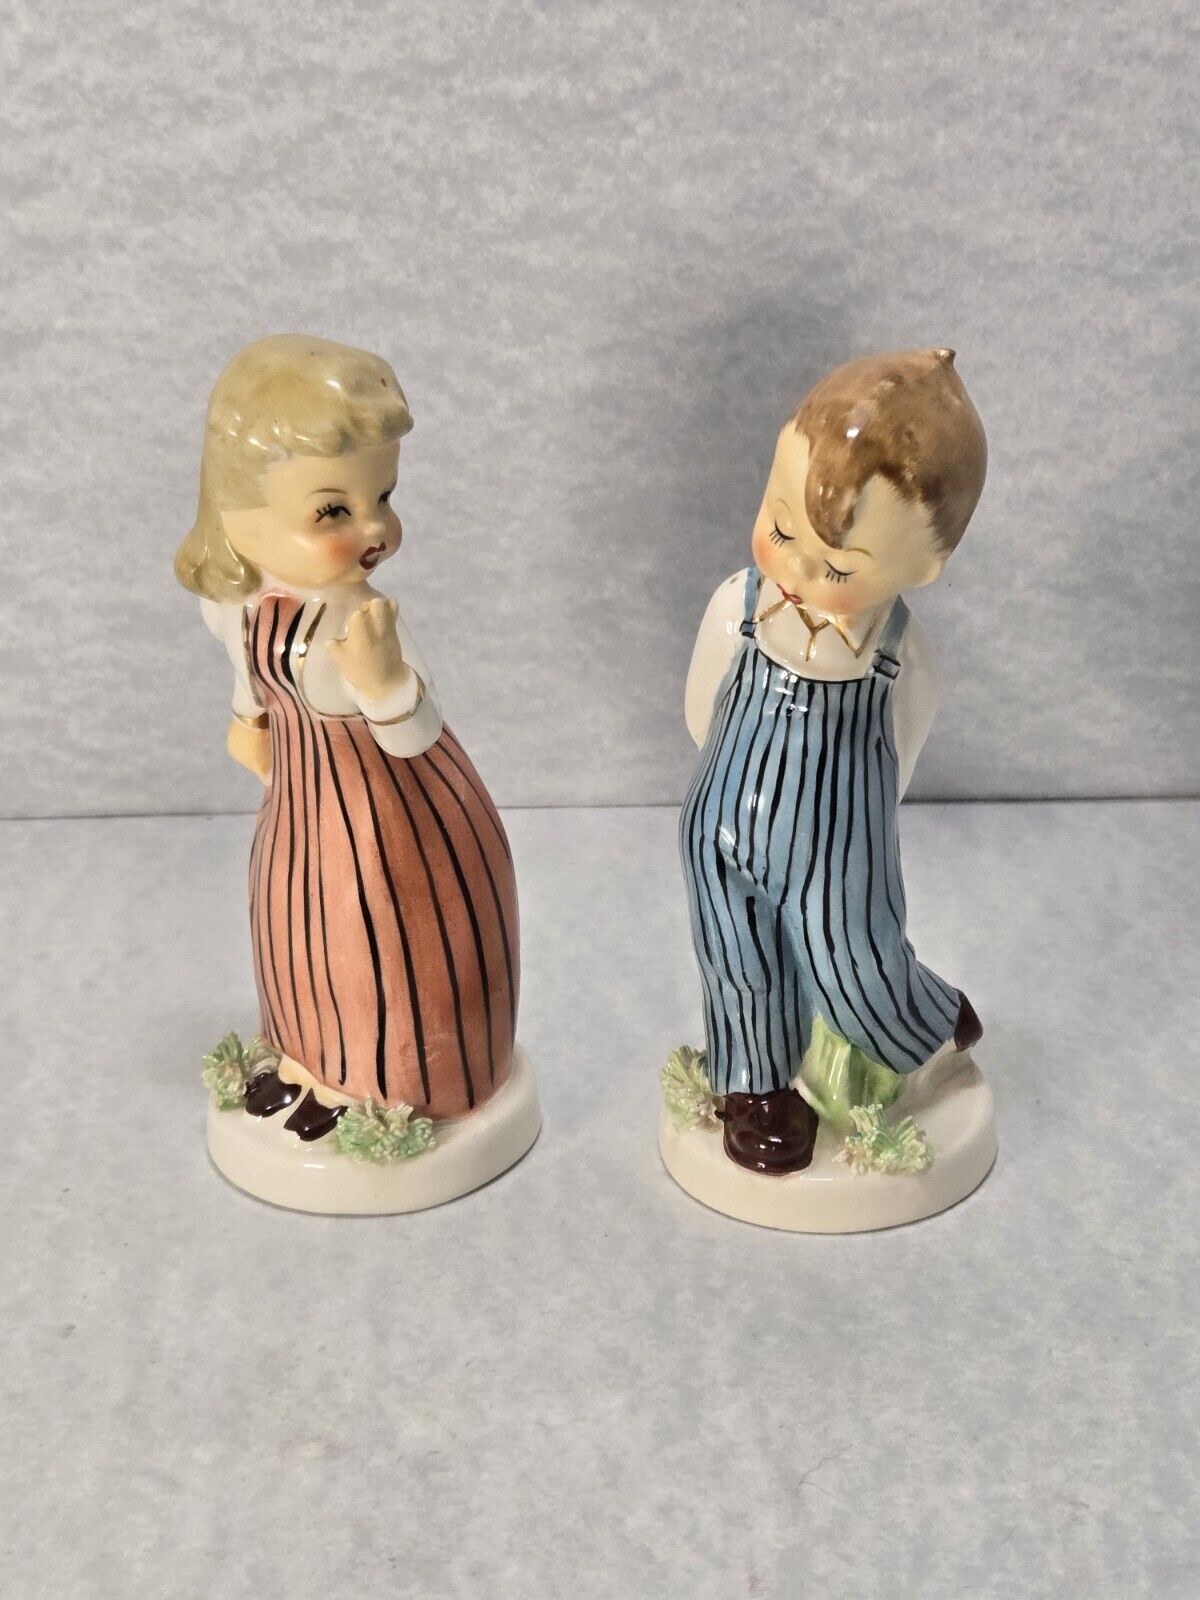 Vintage Napco Shy Boy W/ Flower and Girl Ceramic Figurine Set S287C & S287D 5